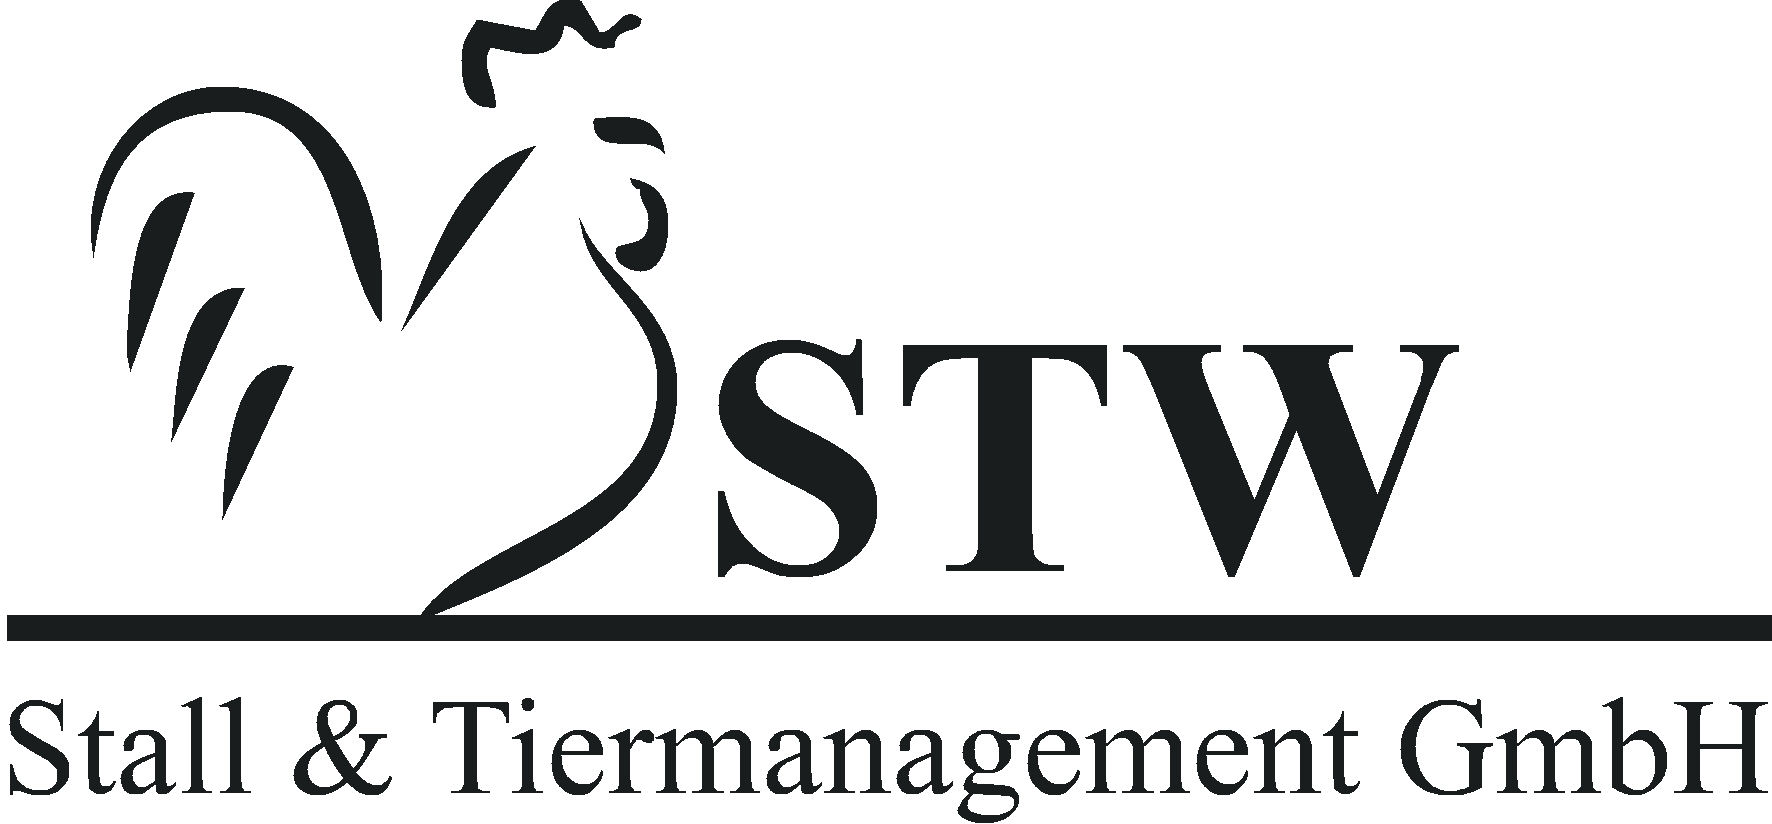 STW Stall- & Tiermanagement GmbH